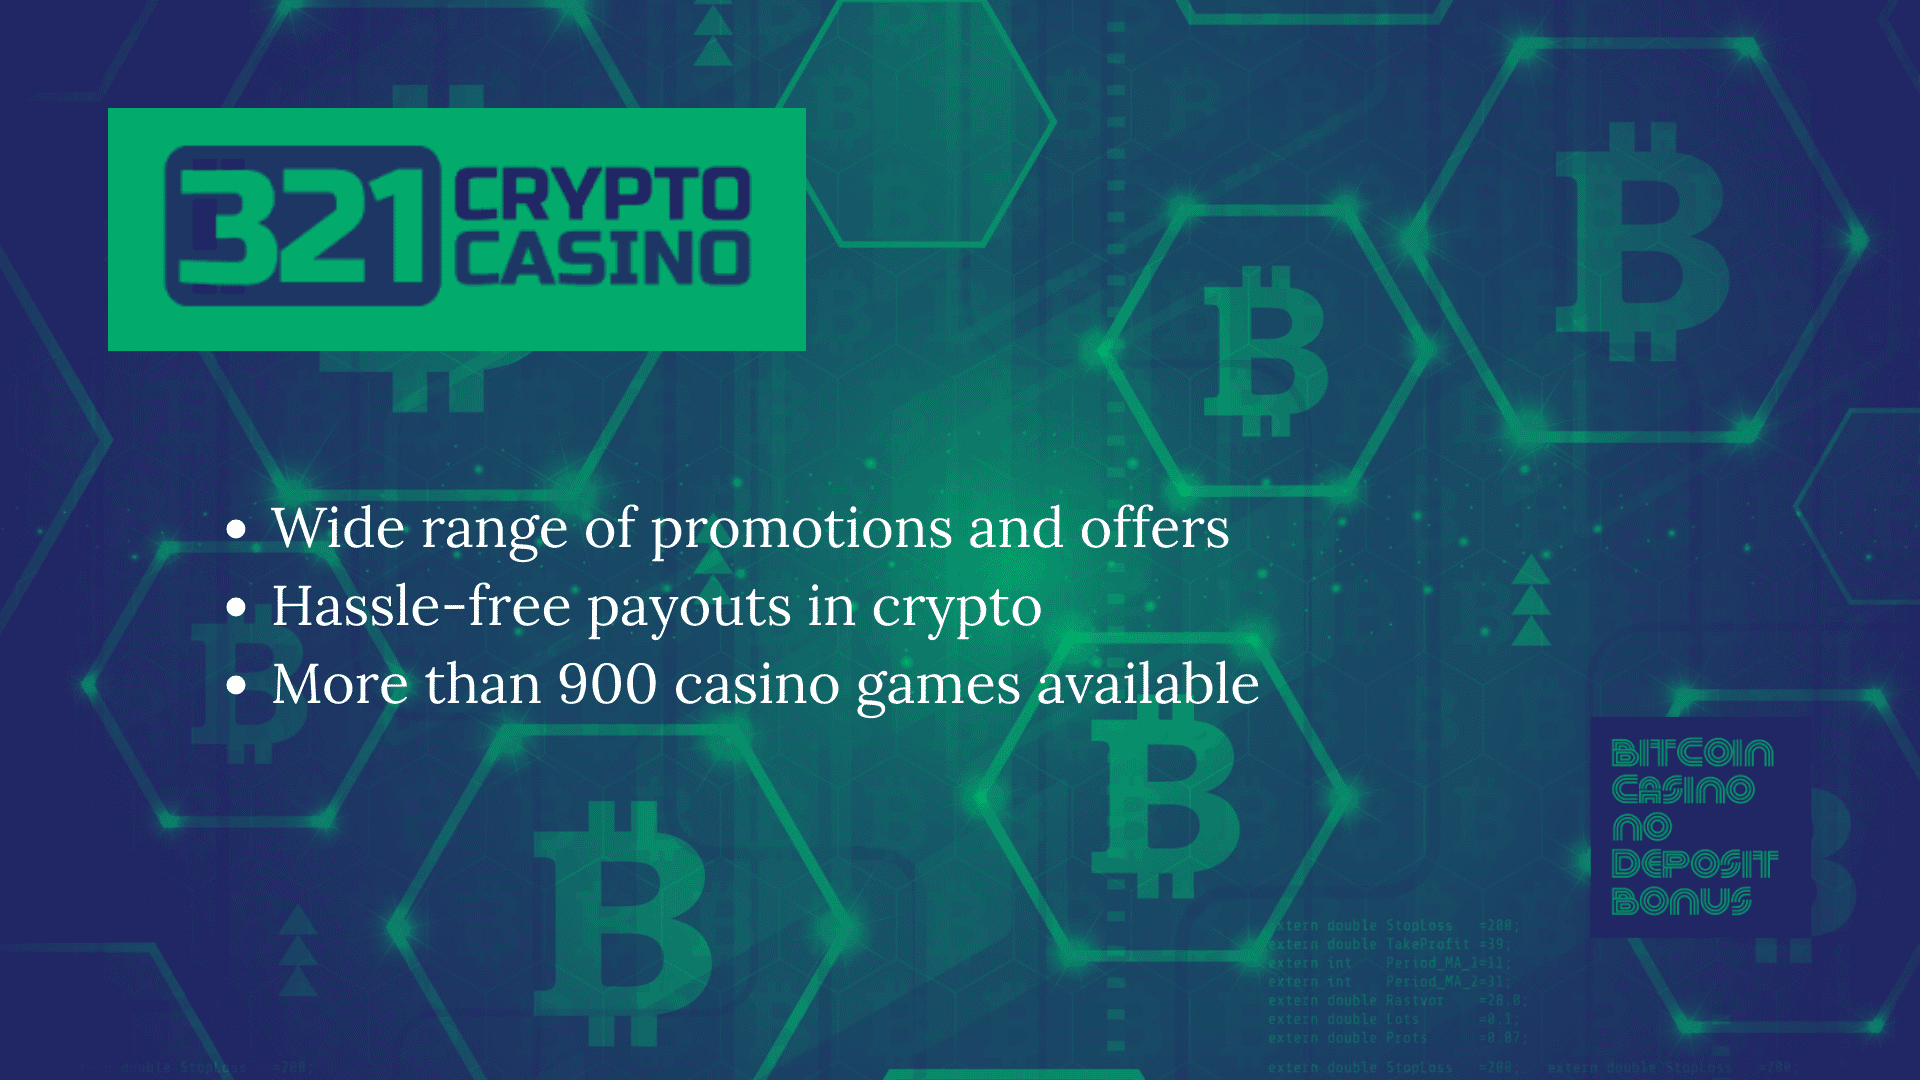 You are currently viewing 321 Crypto Casino Bonus Codes – 321CryptoCasino.com Free Spins June 2022